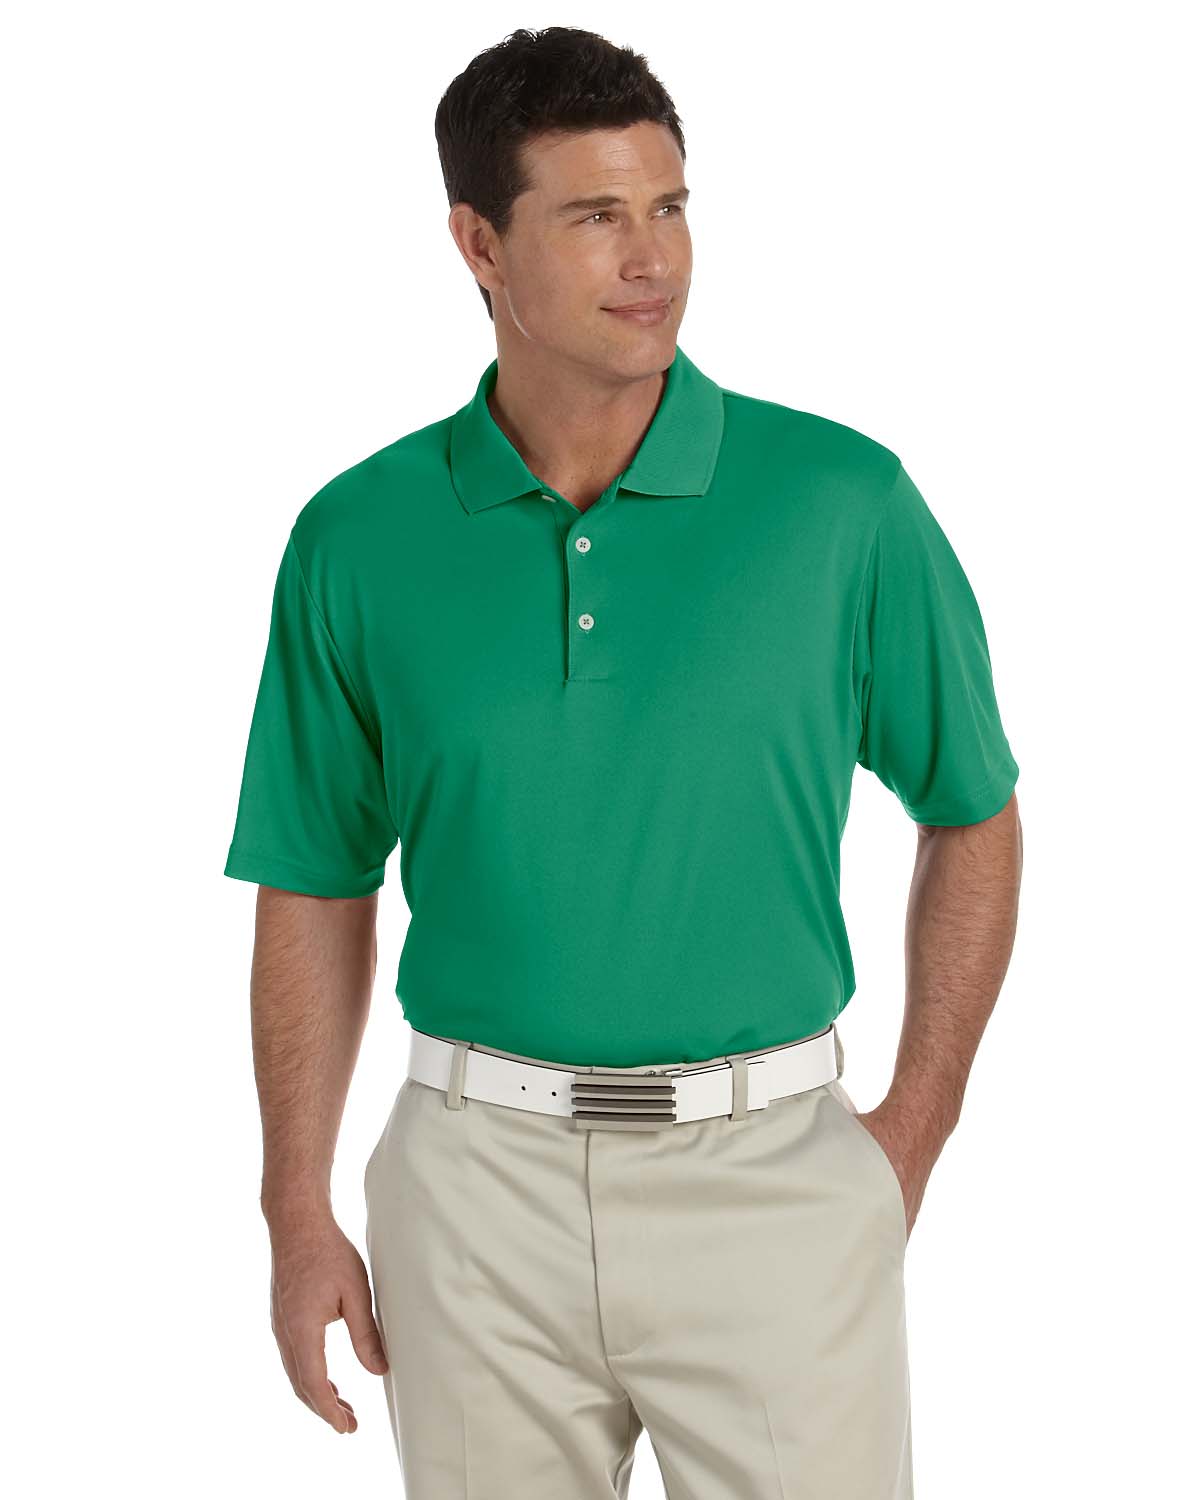 Adidas Golf Mens ClimaLite Rib knit collar Short-Sleeve Polo Shirt S